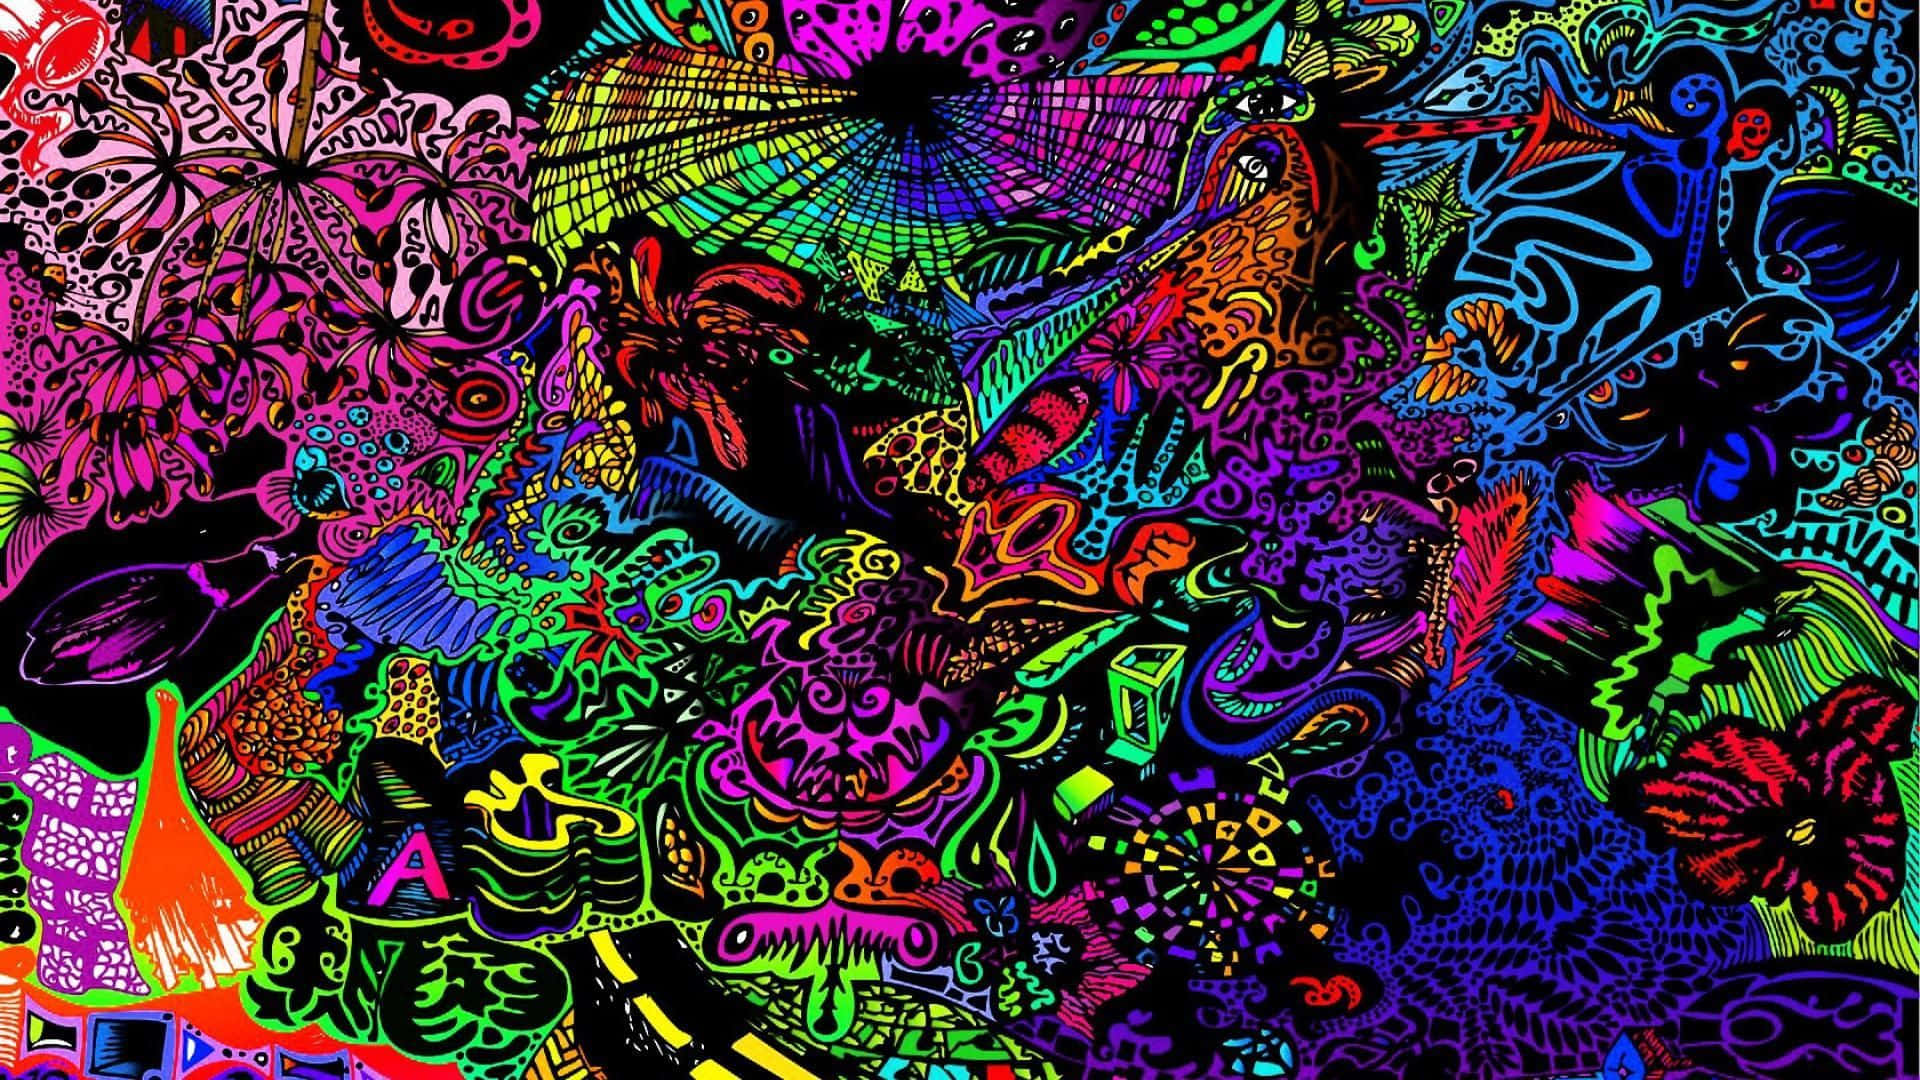 "Explore Your Imagination With Trippy Desktop Wallpapers" Wallpaper